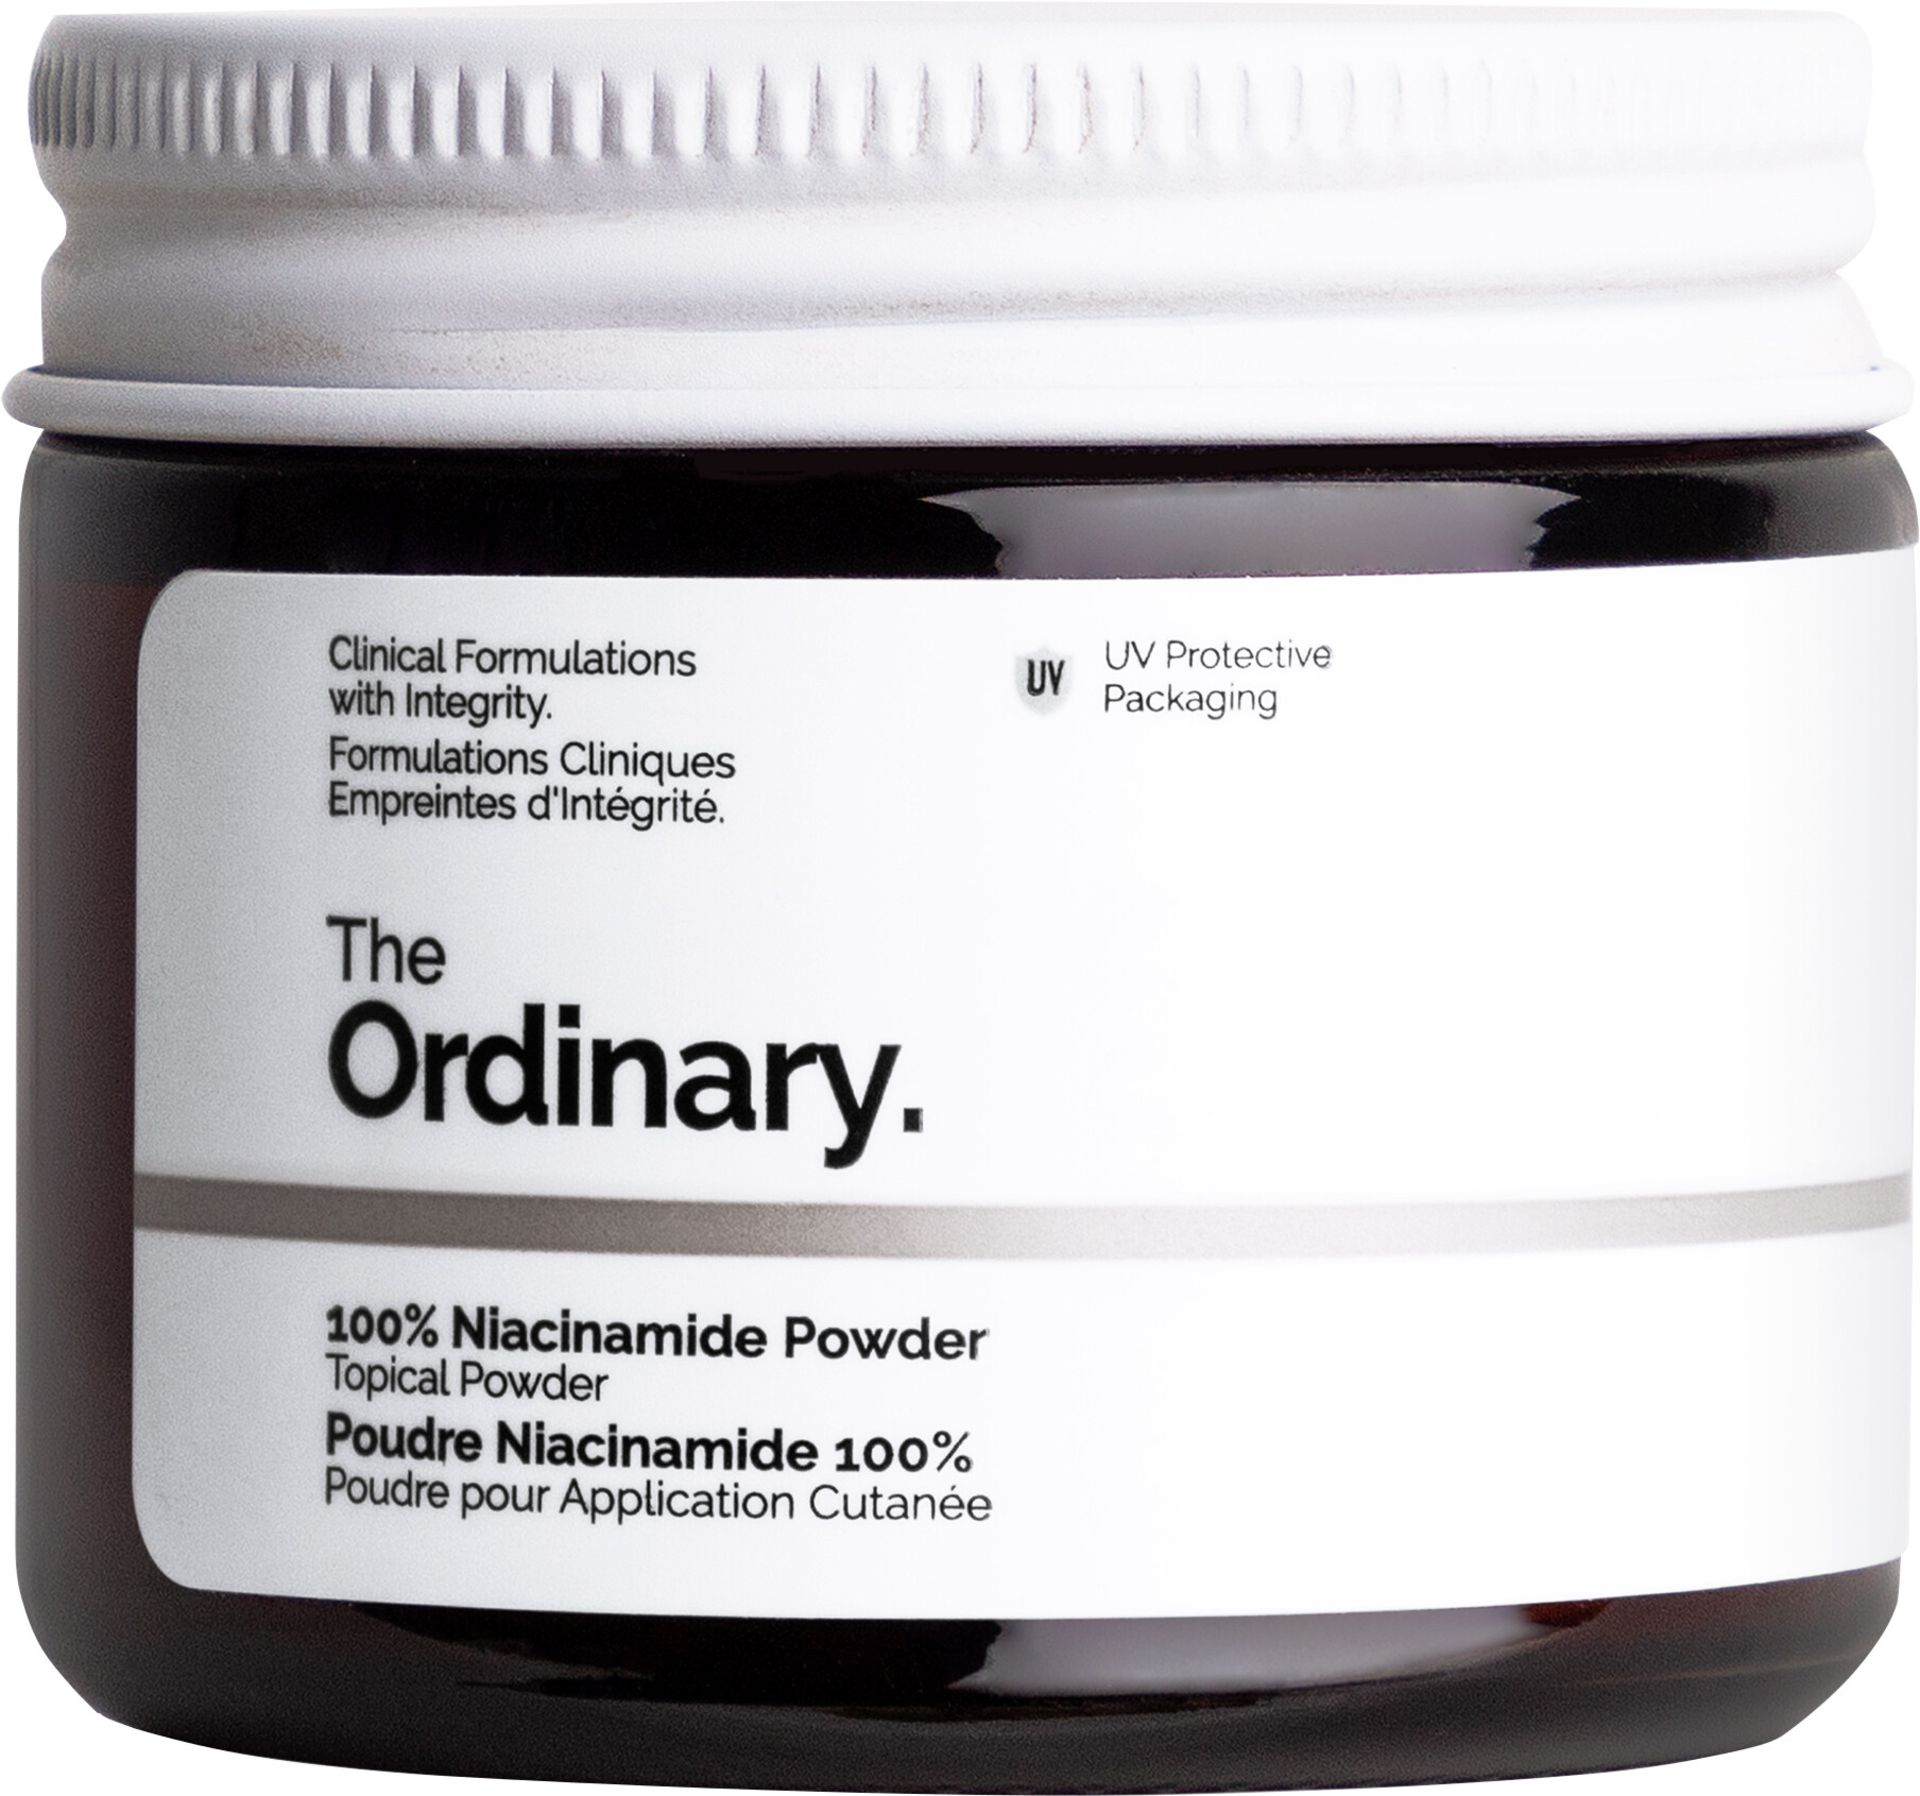 The Ordinary Niacinamide Powders x 60pcs Beauty Skincare Cosmetics Job Lot - Image 3 of 3